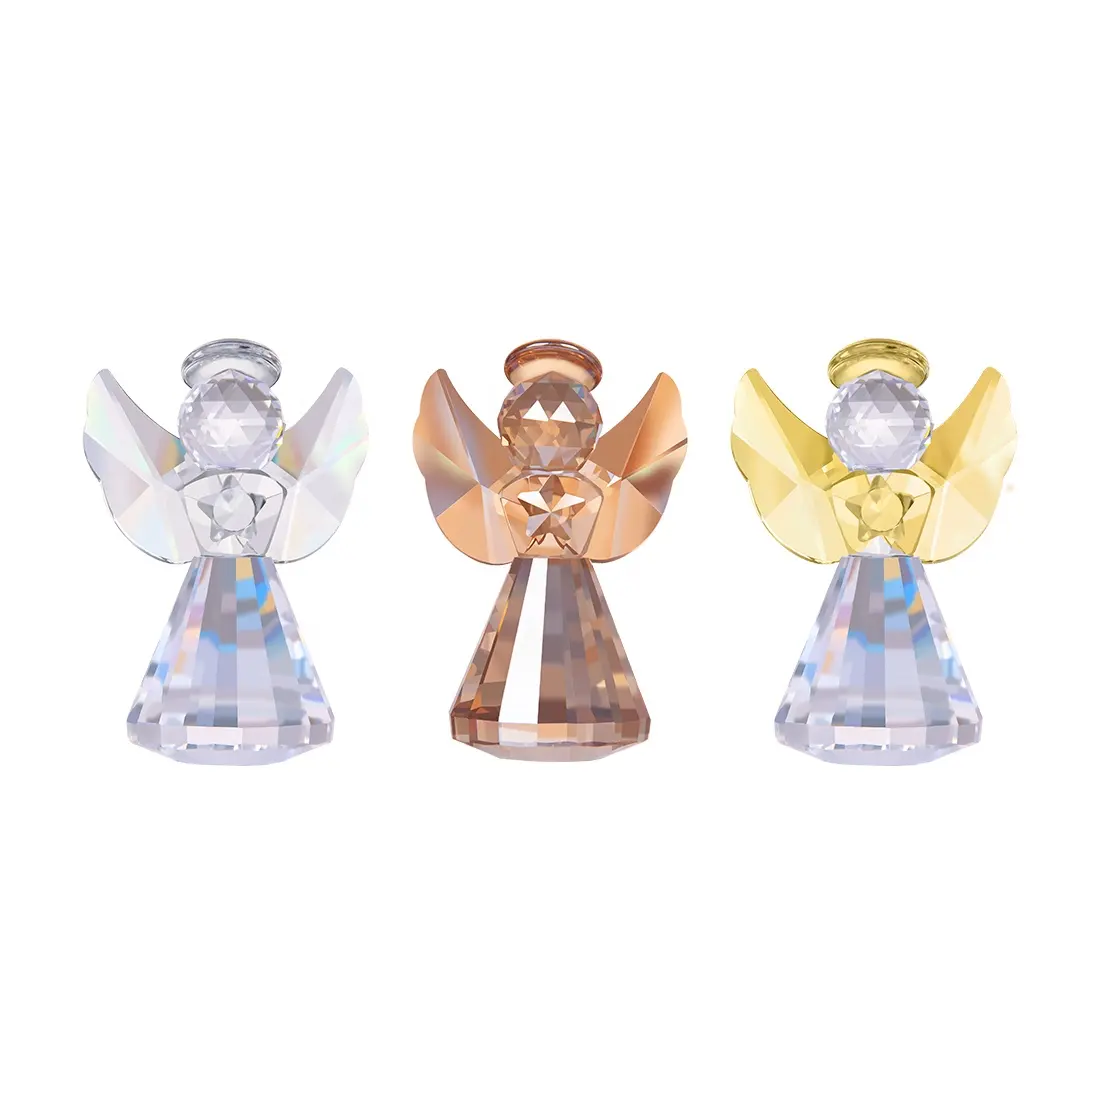 3 colors Crystal Angel Figurine Christmas Decorative Clear Glass Home Decor Ornaments Gift Idea